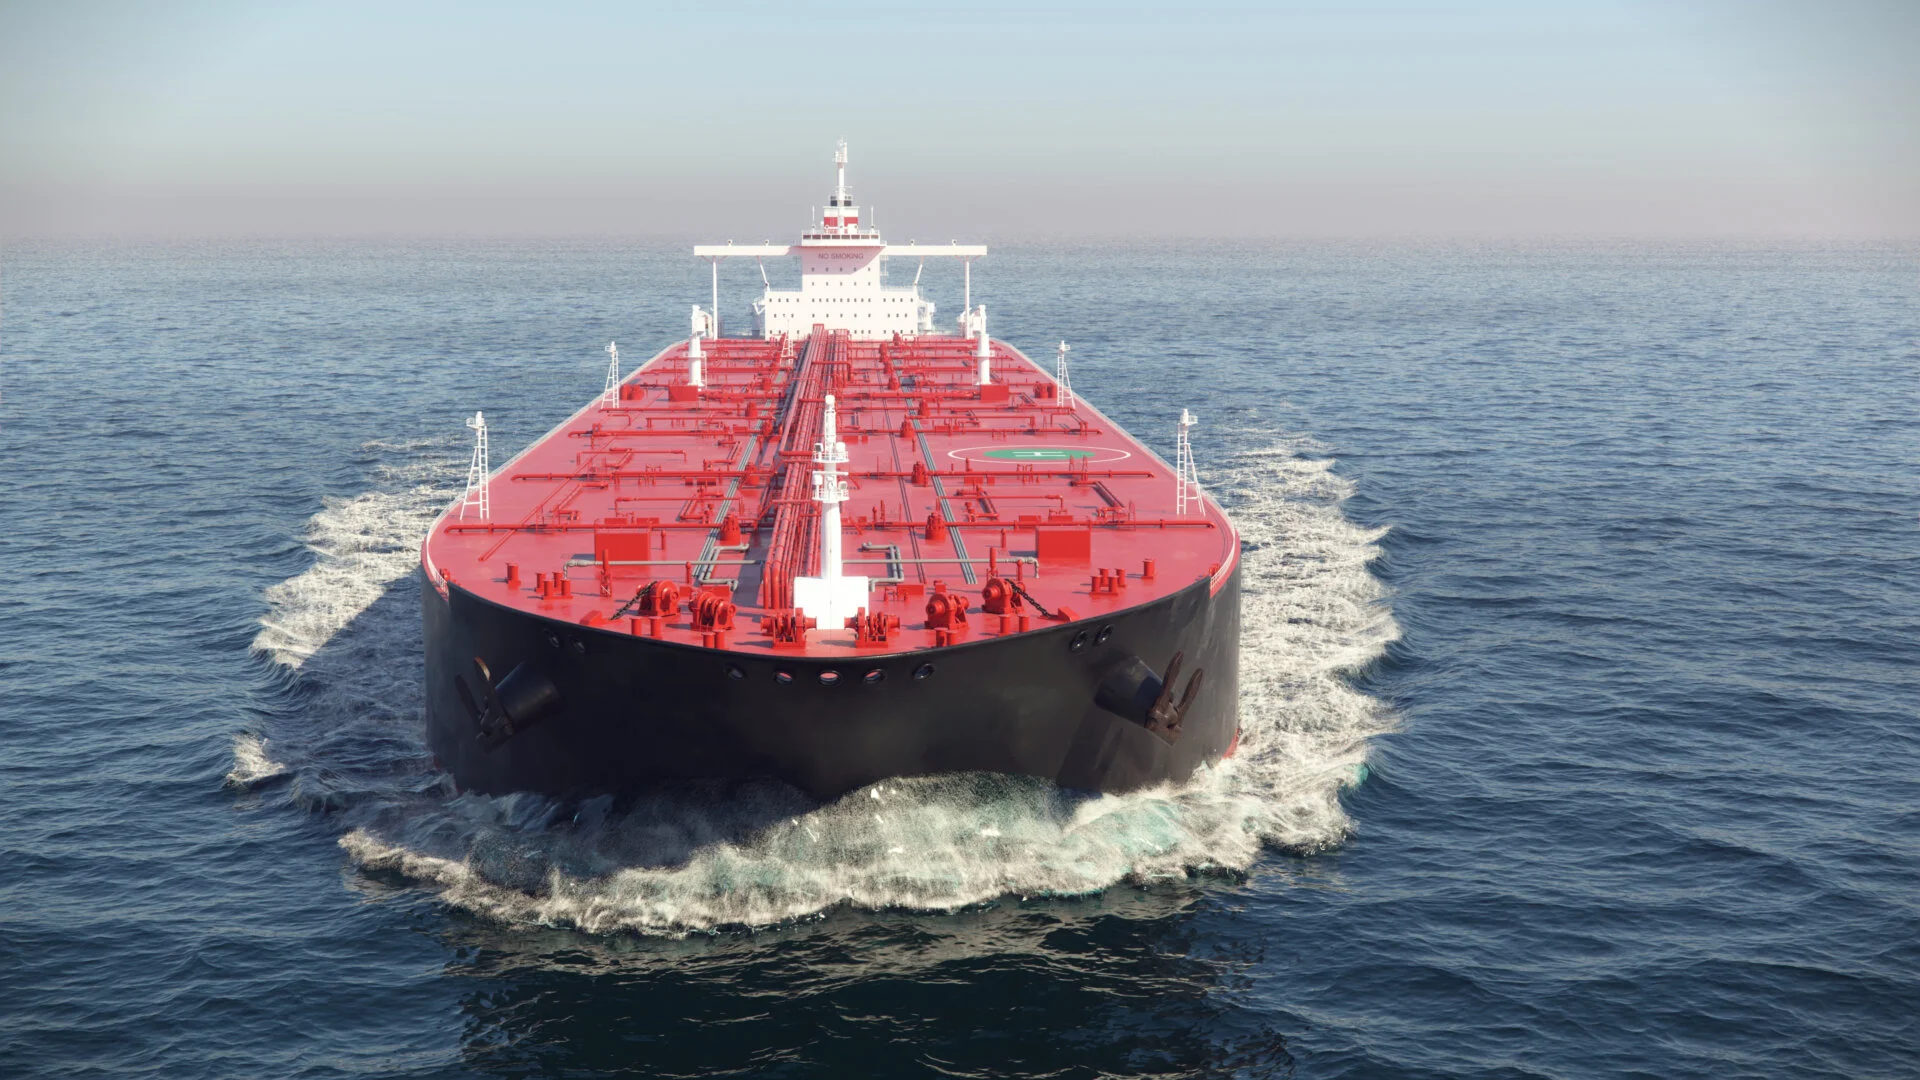 Sea launches pre-fixture vessel compliance solution for shifting regulatory landscape